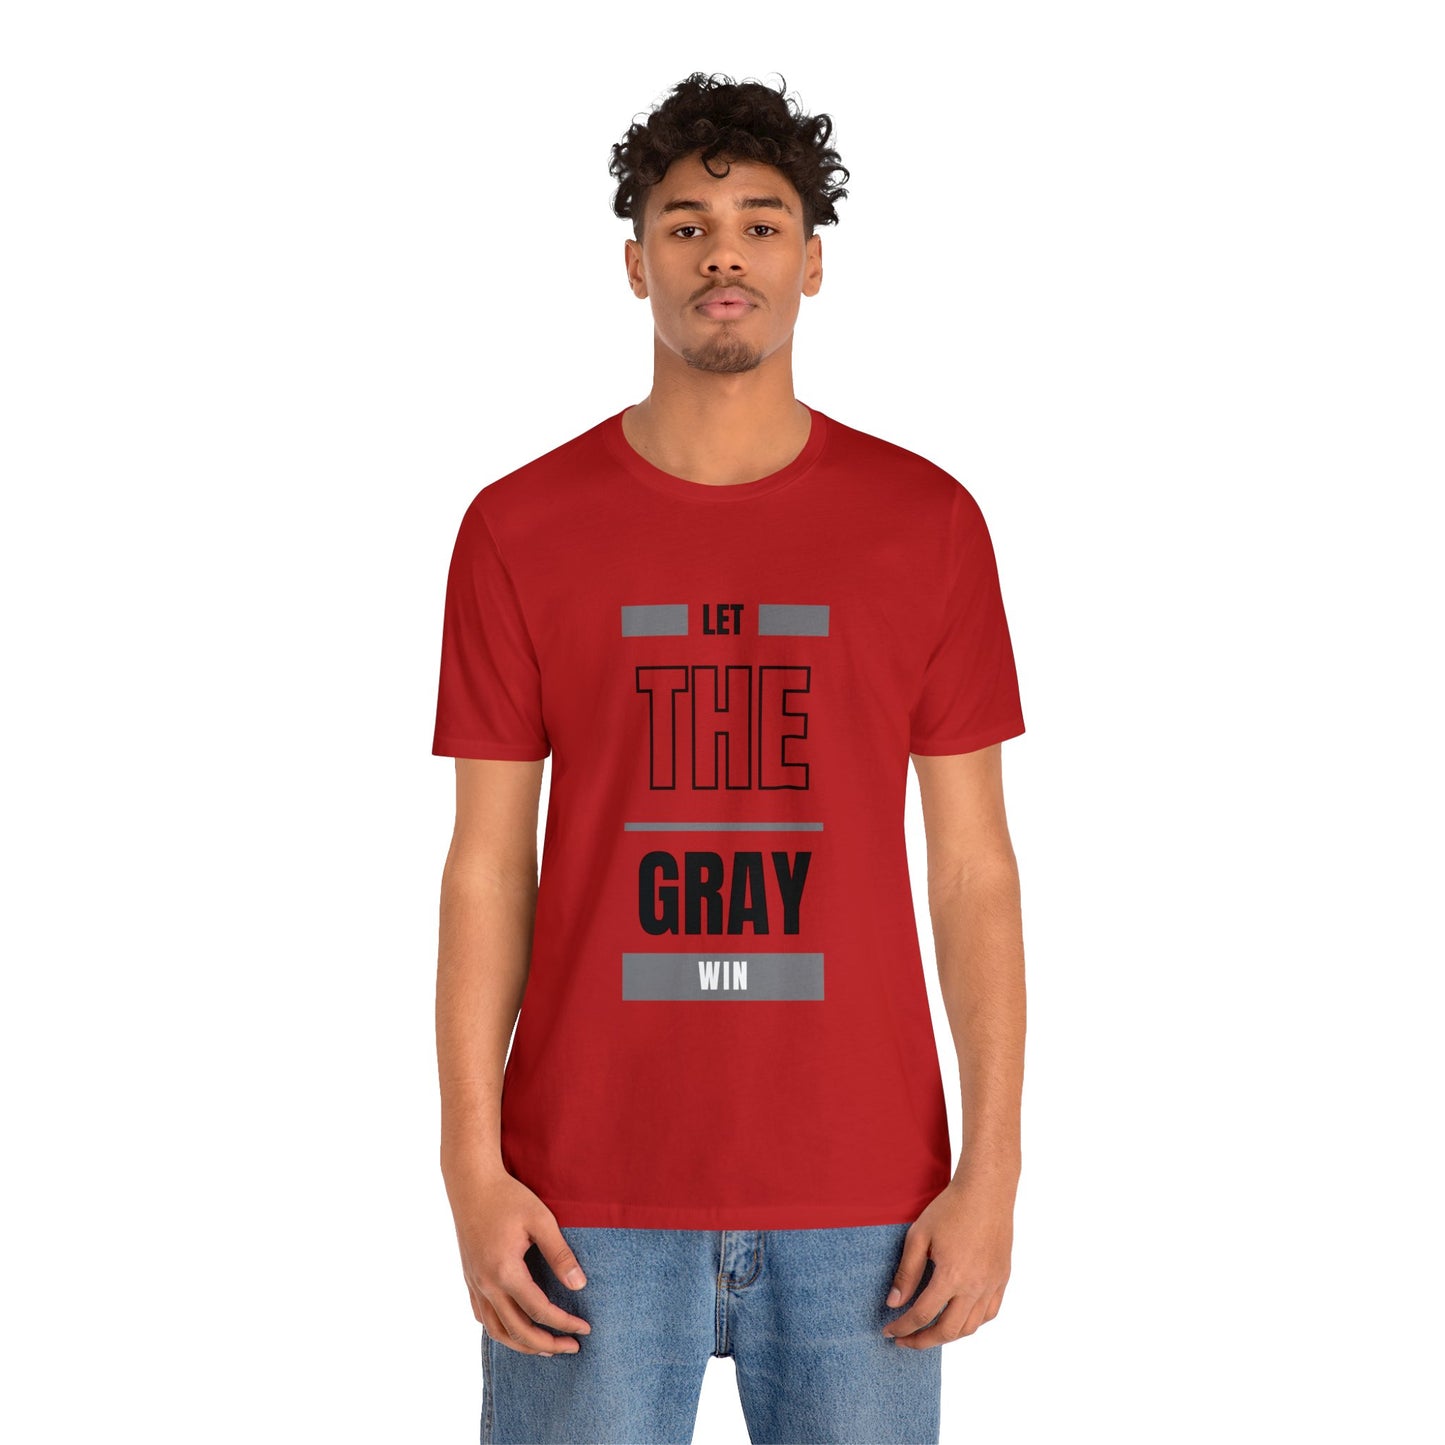 Let the Gray Win, Unisex Jersey Short Sleeve Tee